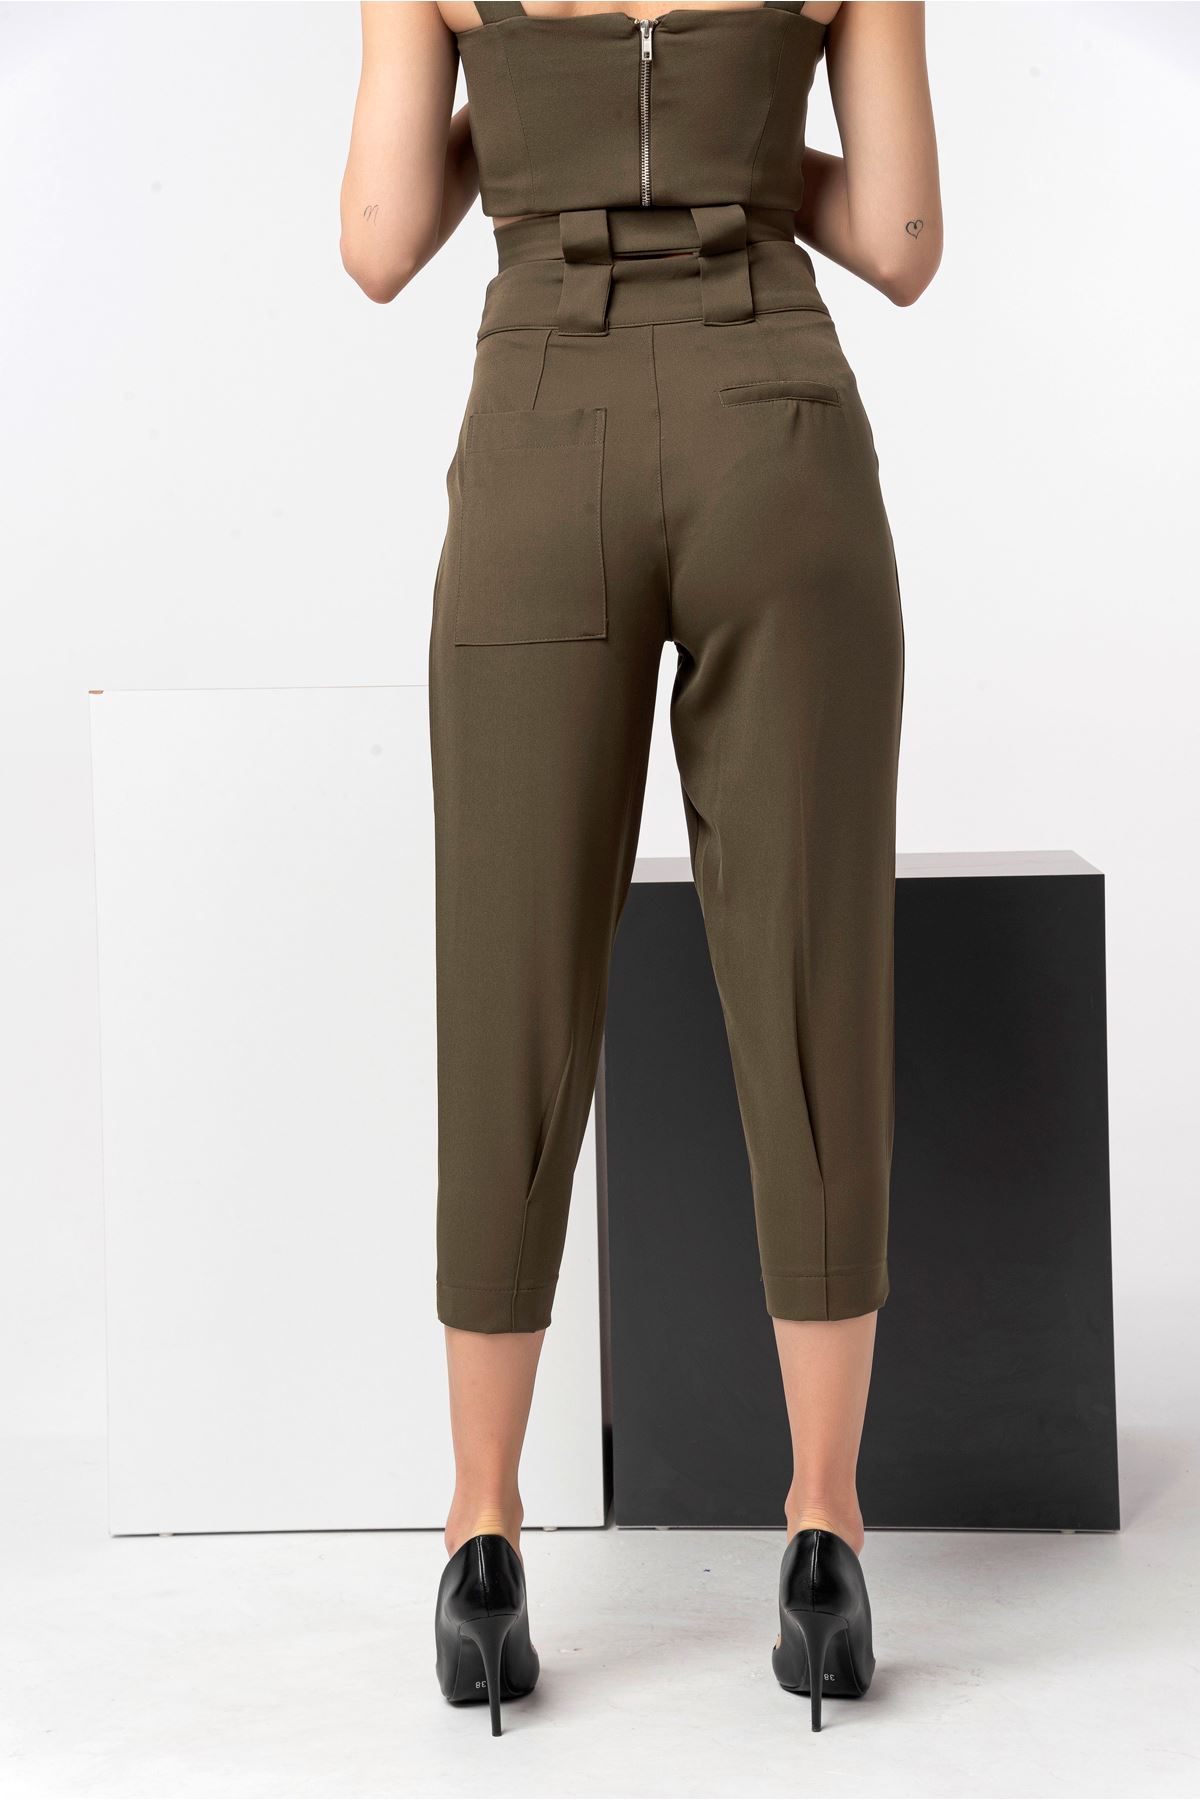 Atlas Fabric Carrot Style Button Women'S Trouser - Khaki 